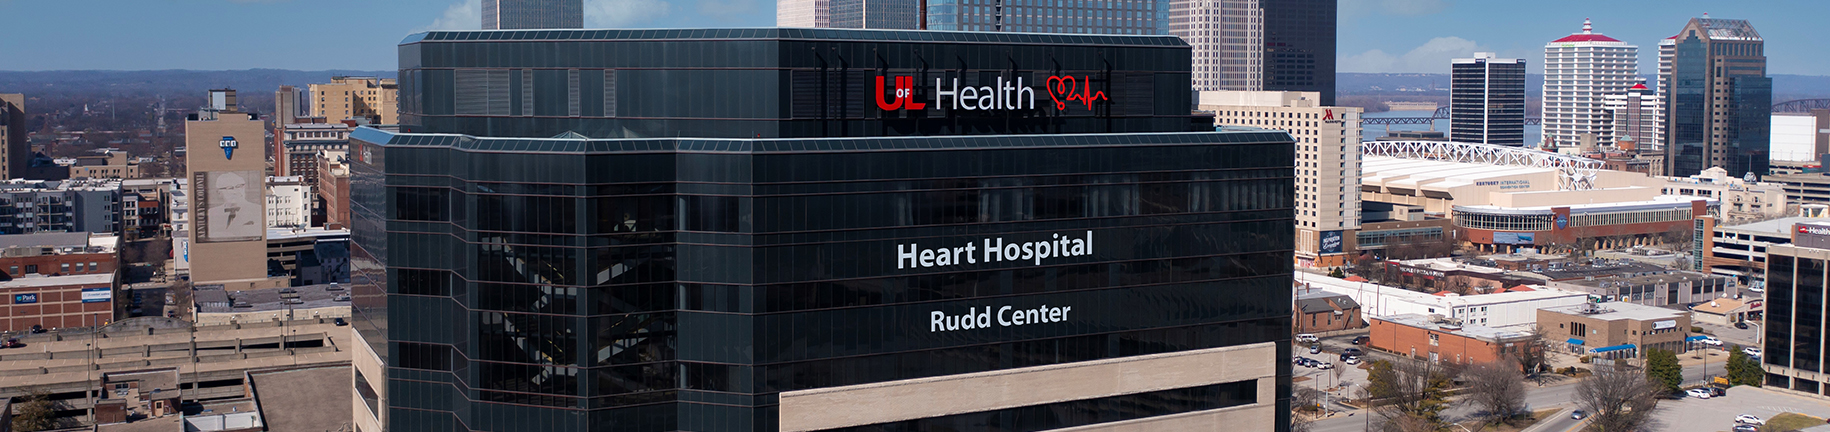 Heart Hospital Banner Image